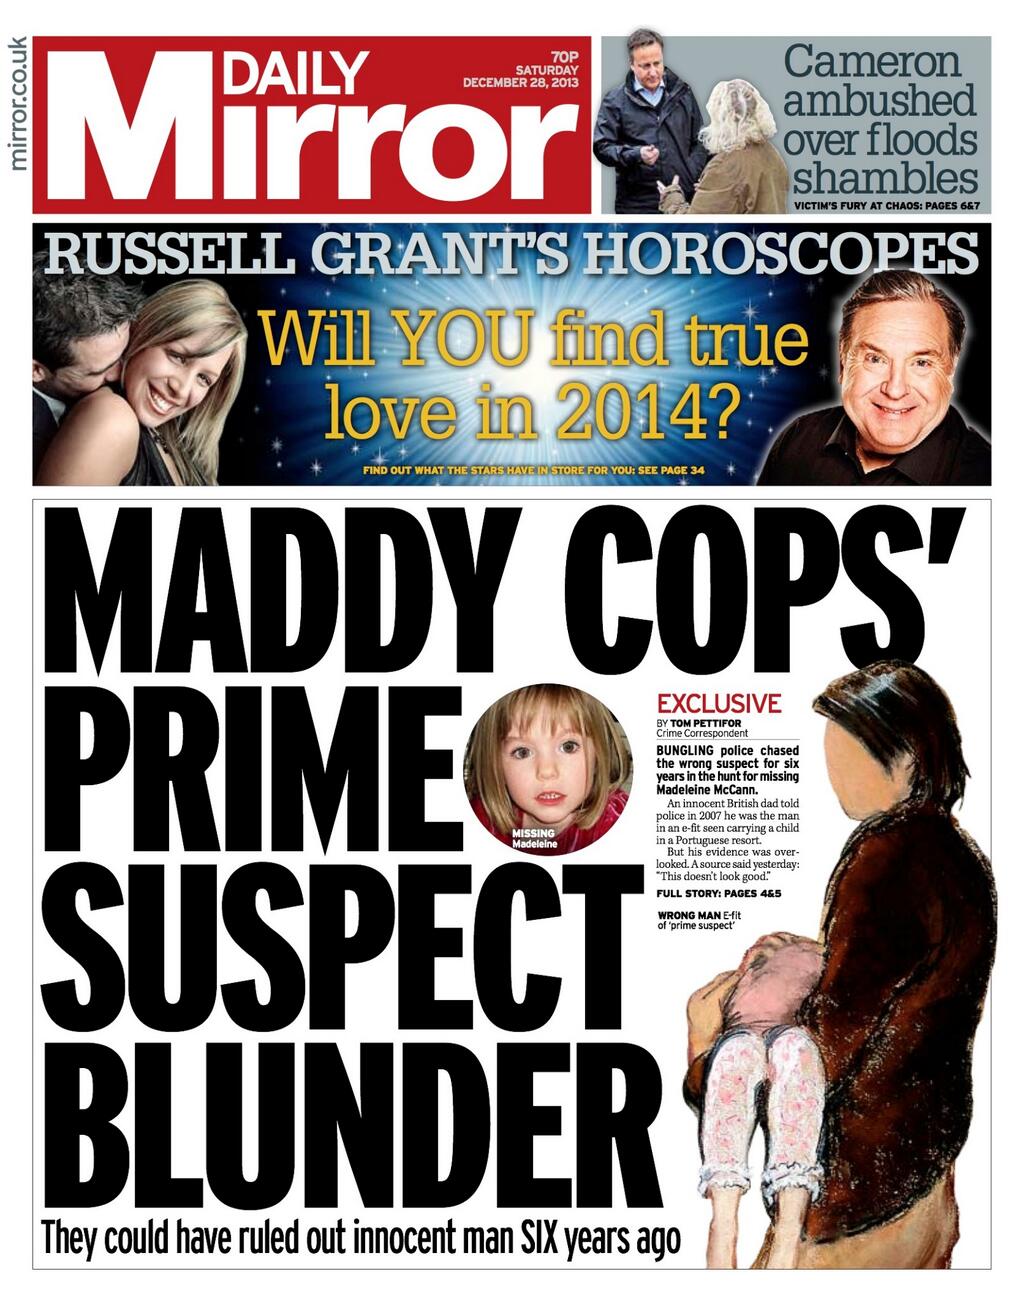 Daily Mirror, 28 December 2013